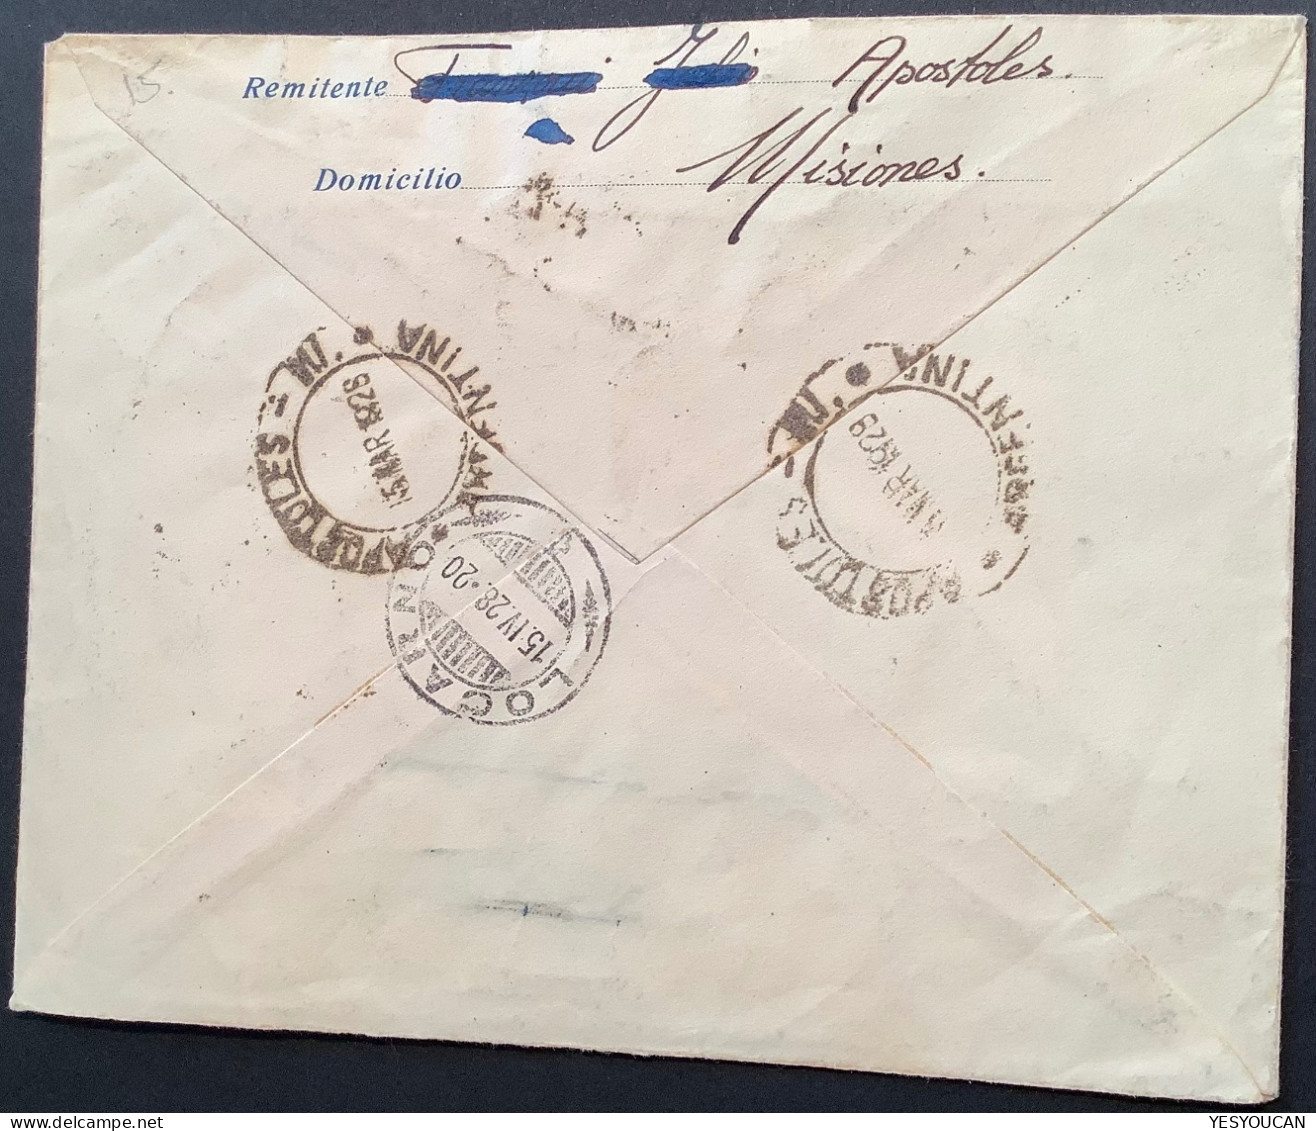 APOSTOLES MISIONES 1928 (Posadas) Cds On Via Aerea 12c Postal Stationery Enveloppe>Locarno (Argentina Air Mail Cover - Postal Stationery